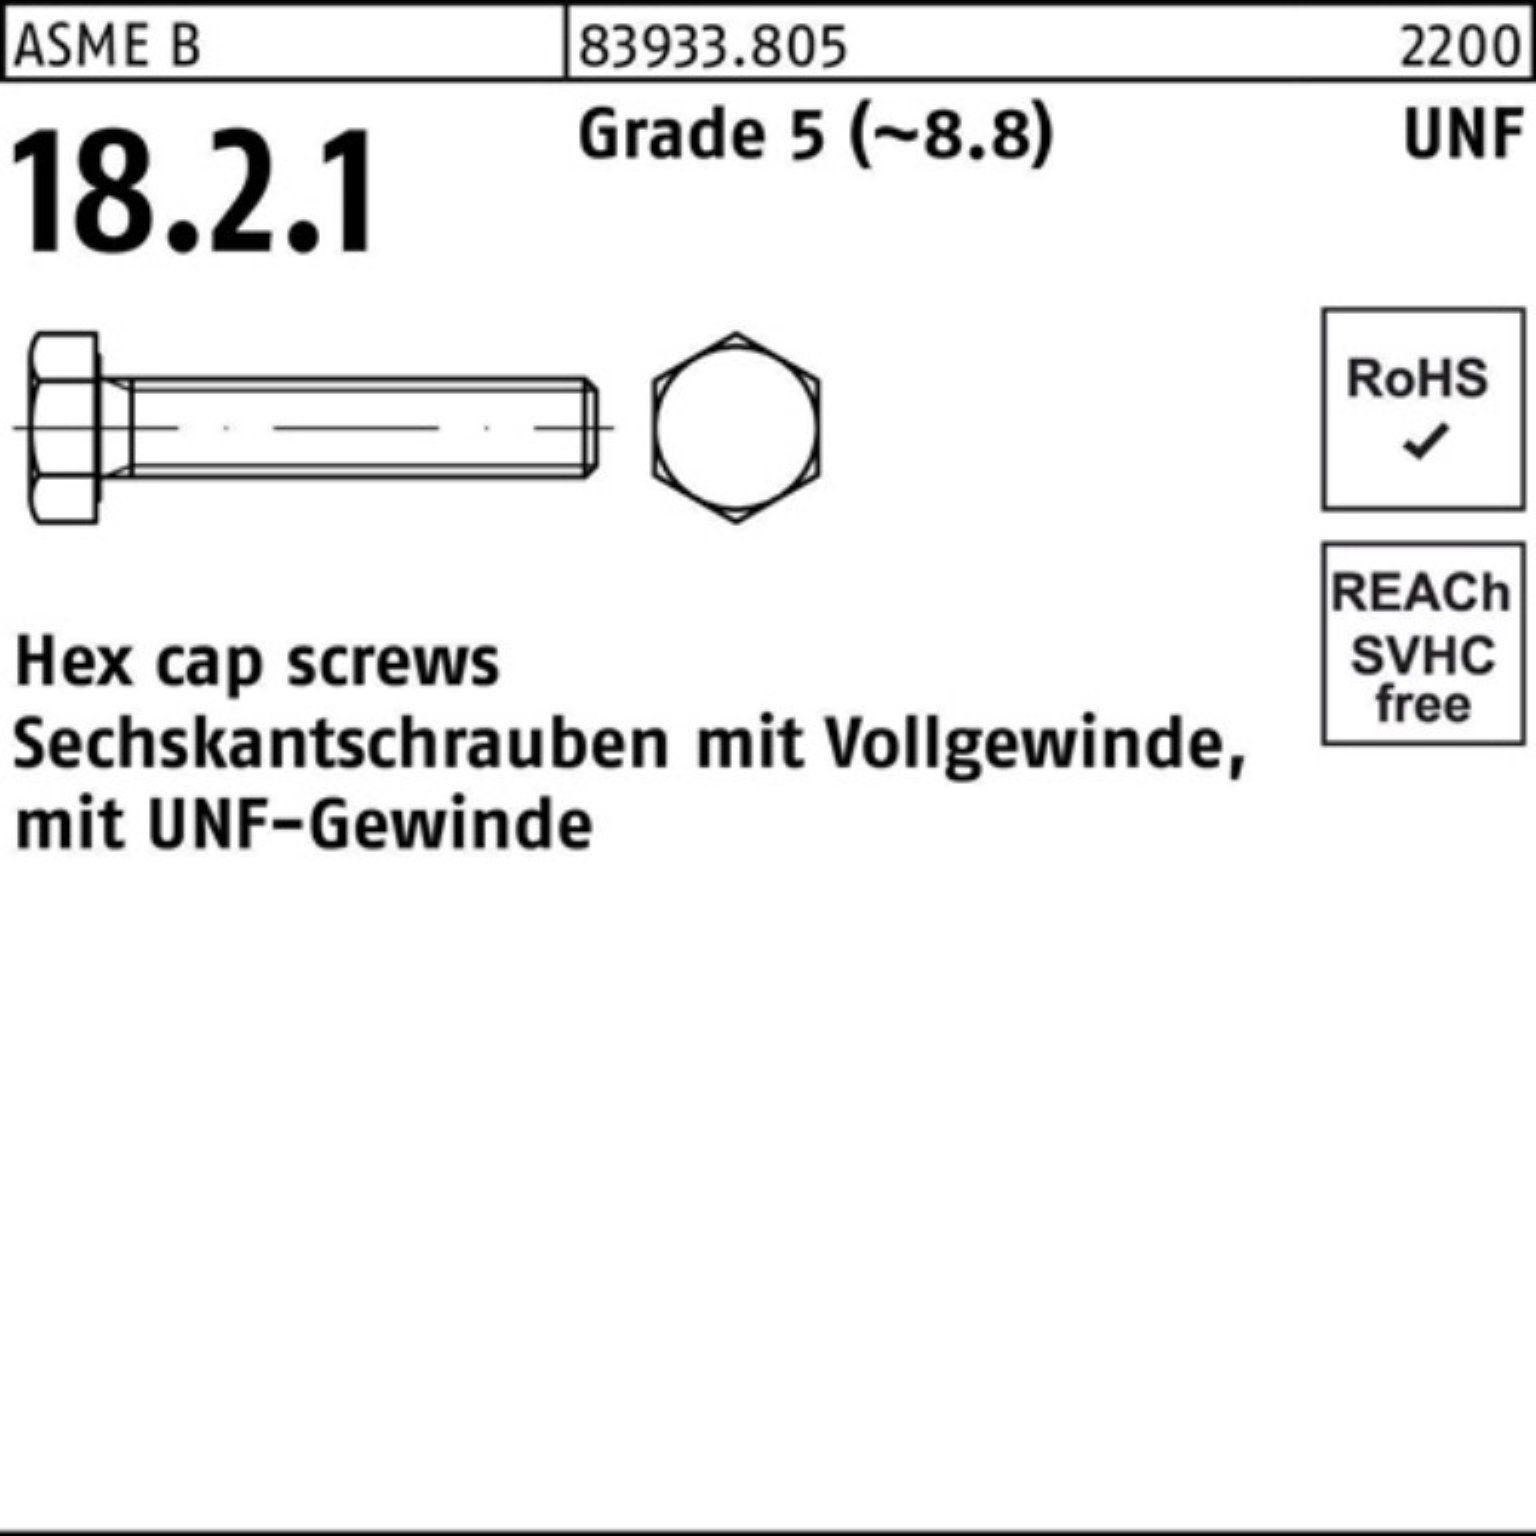 Reyher Sechskantschraube 100er Pack Sechskantschraube R 83933 UNF-Gewinde VG 5/16x 1 Grade 5